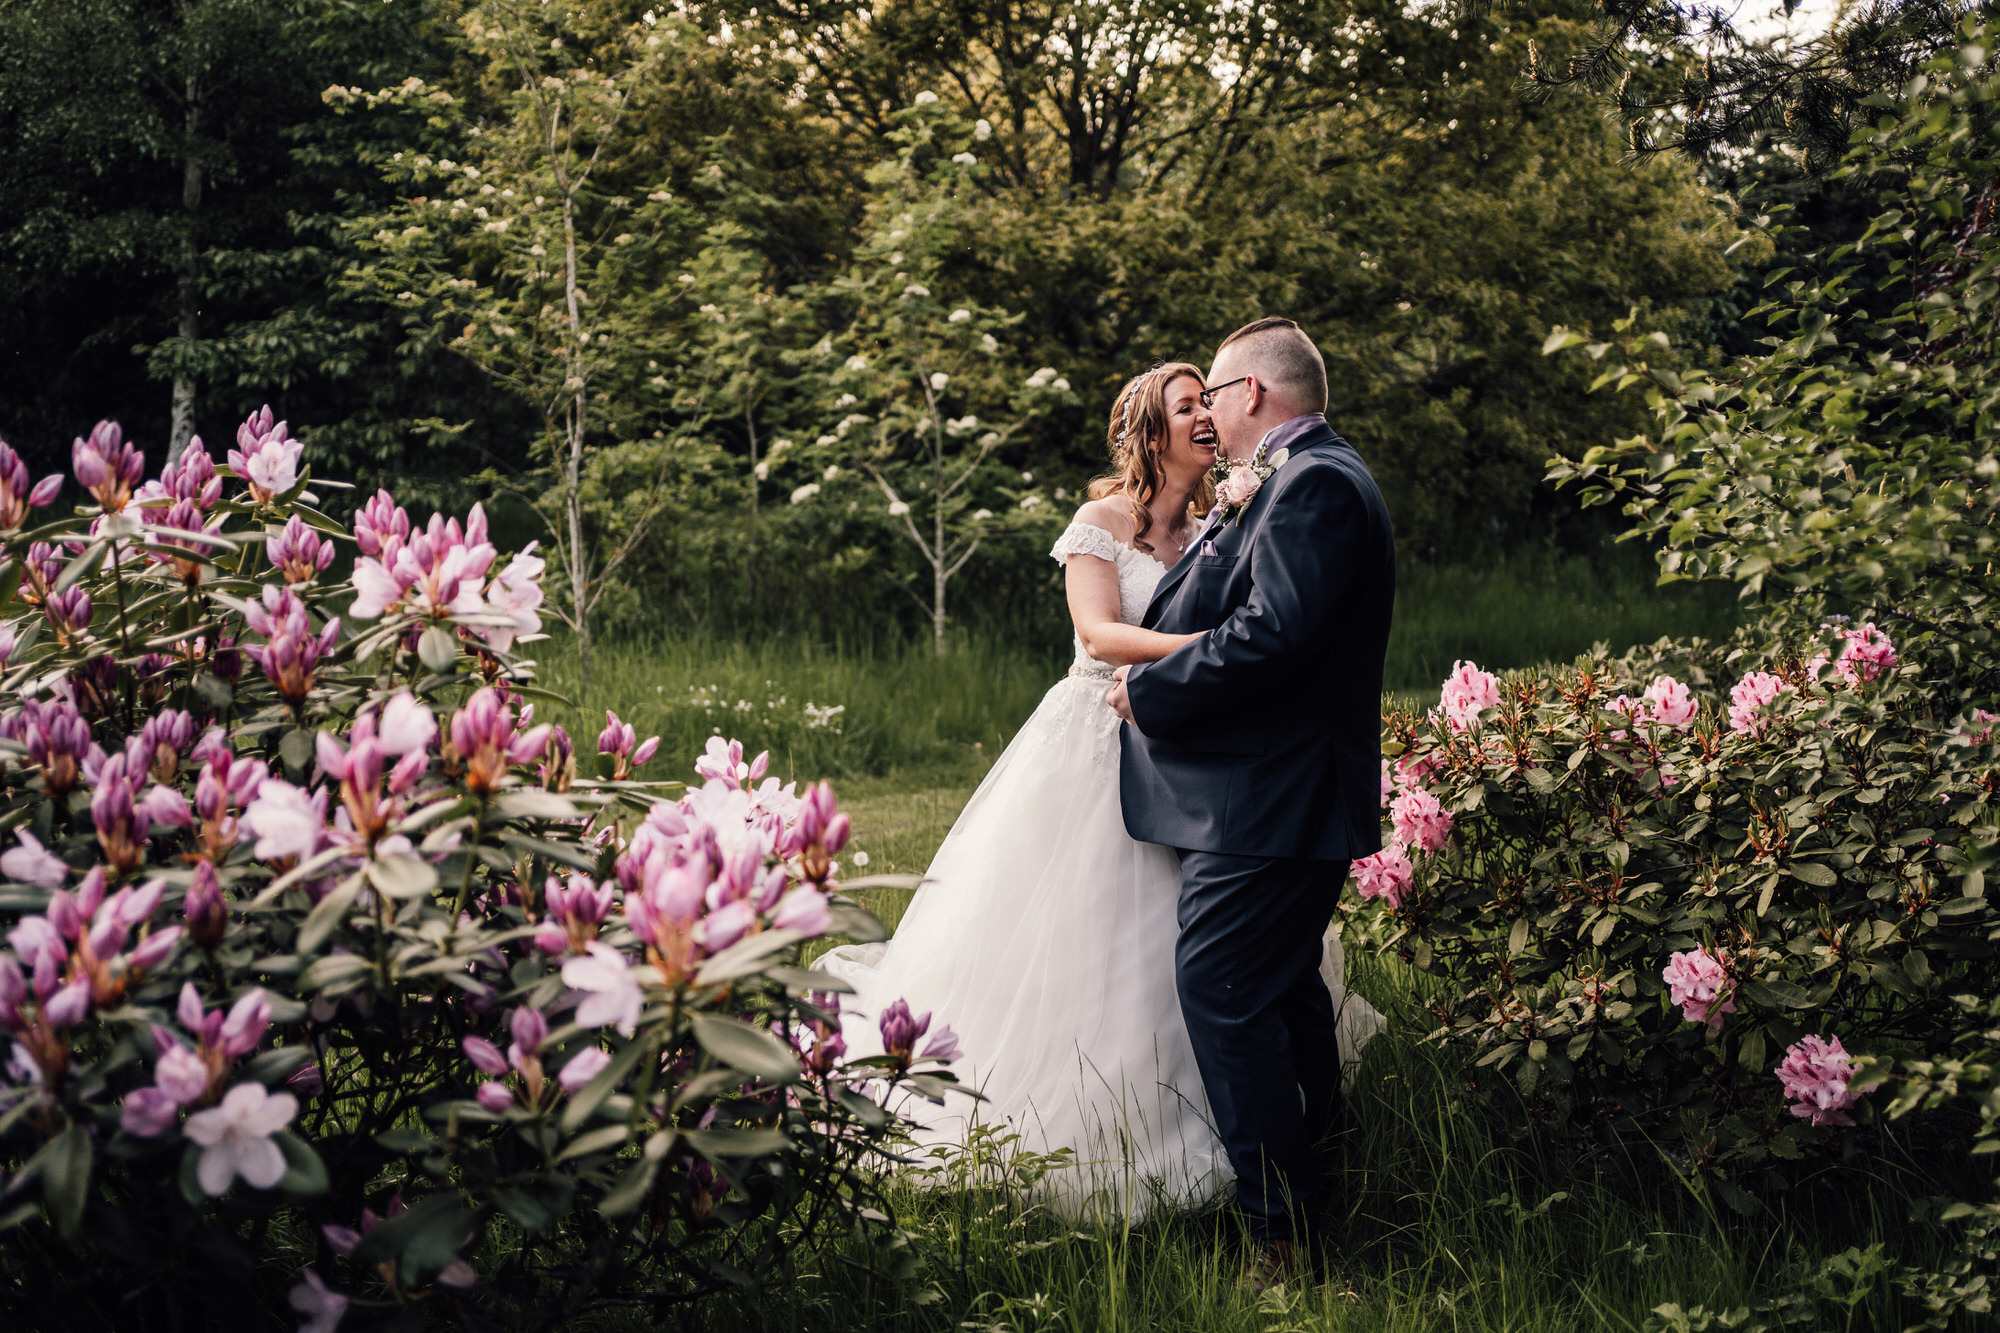 spring seasonal wedding photography of bride and groom among pink blooming flowers